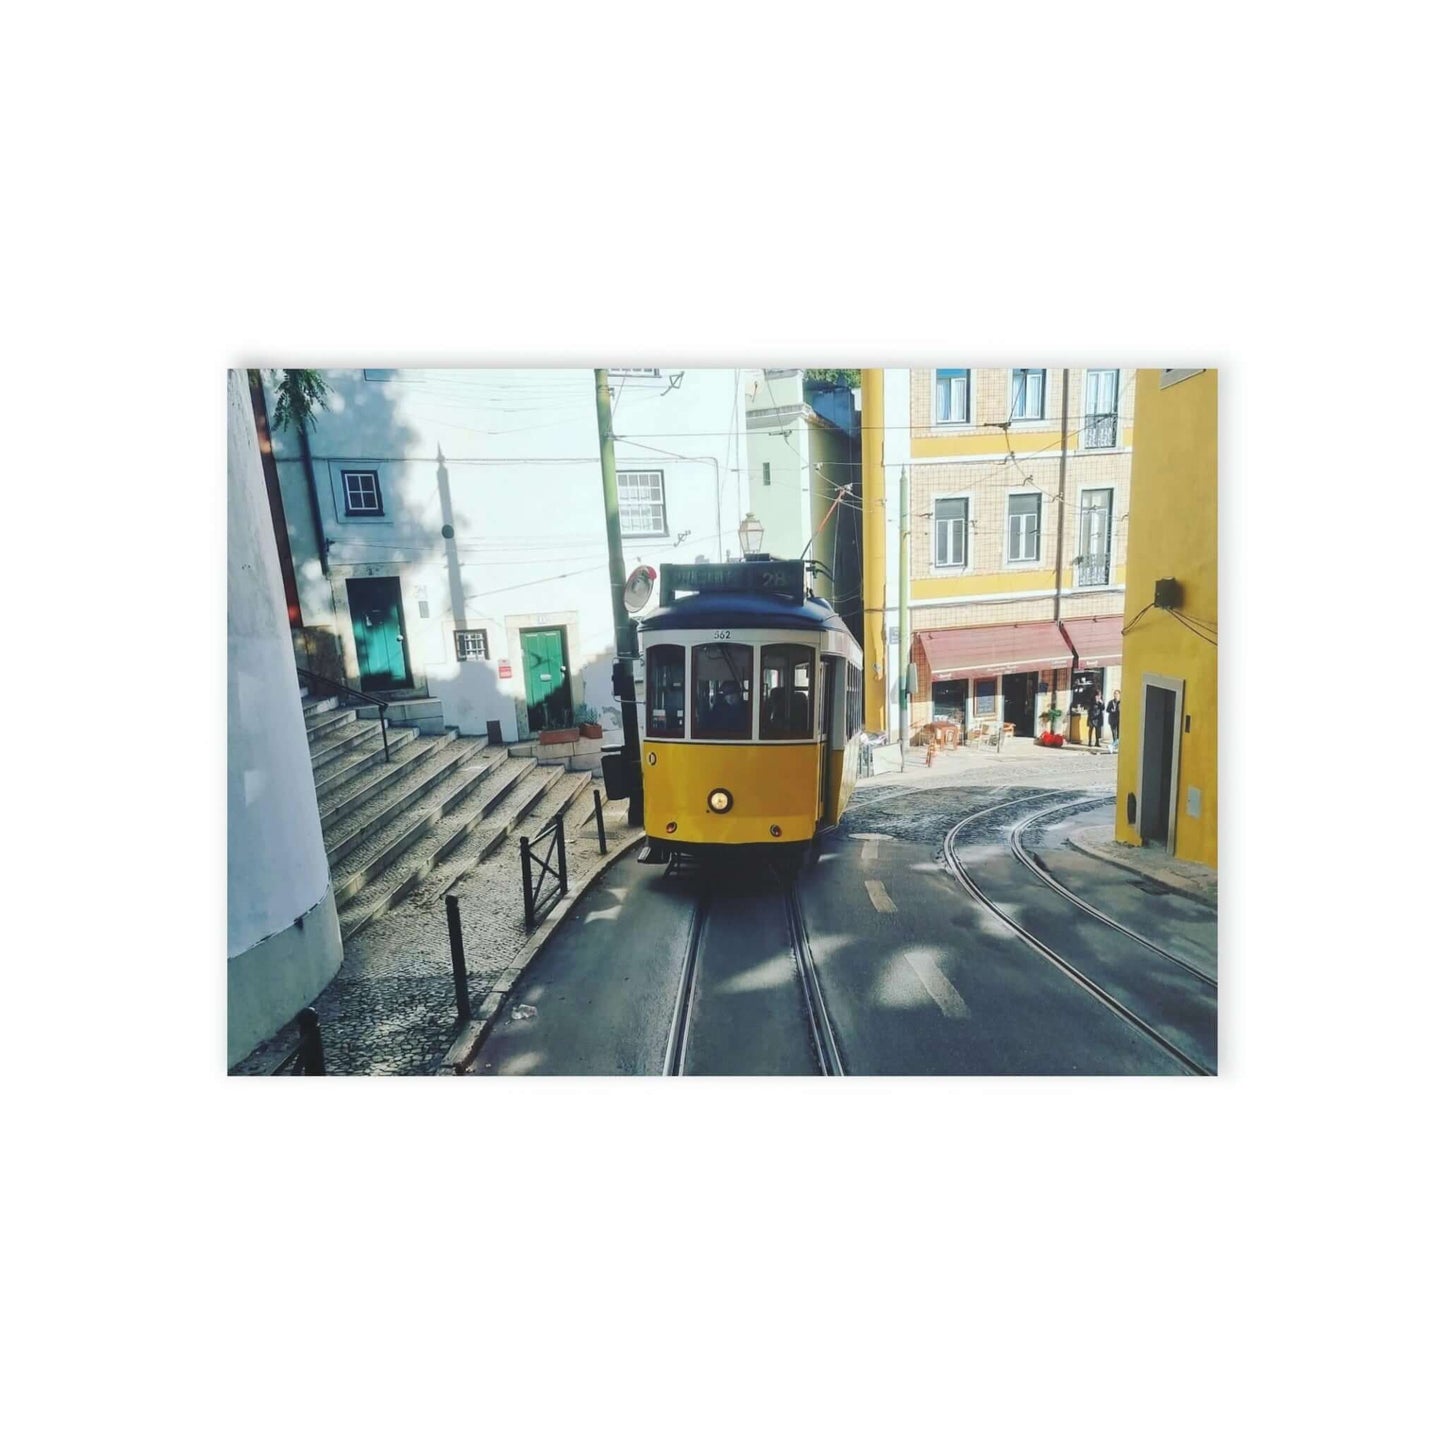 Remodelado Tram | Portugal | Holiday Cards